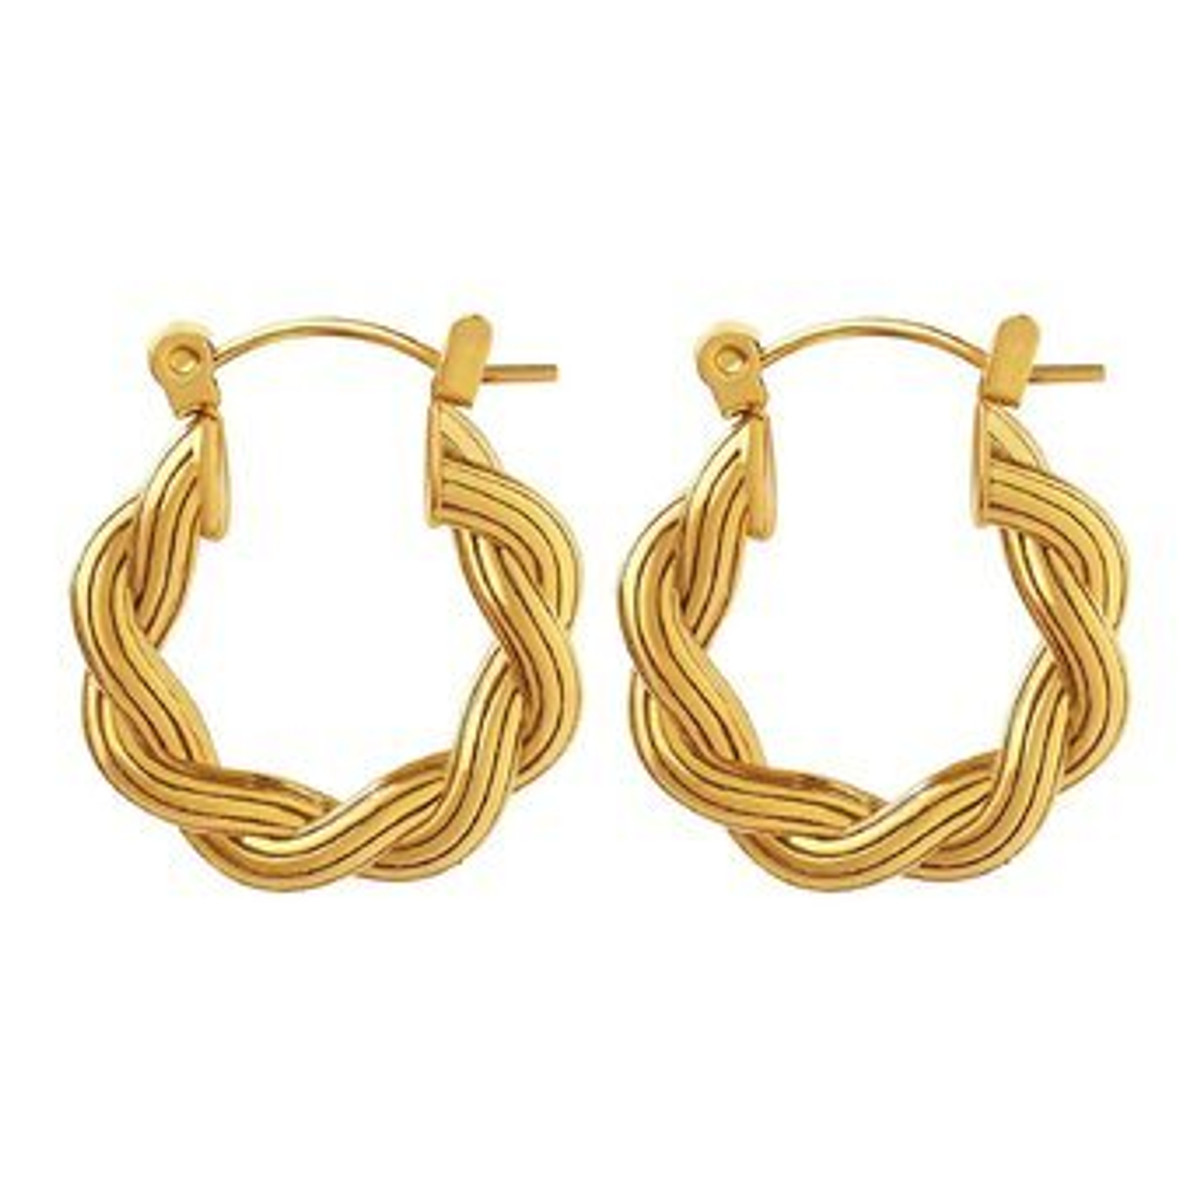 Ravishing Twist, 18K gold plated Stainless steel earrings